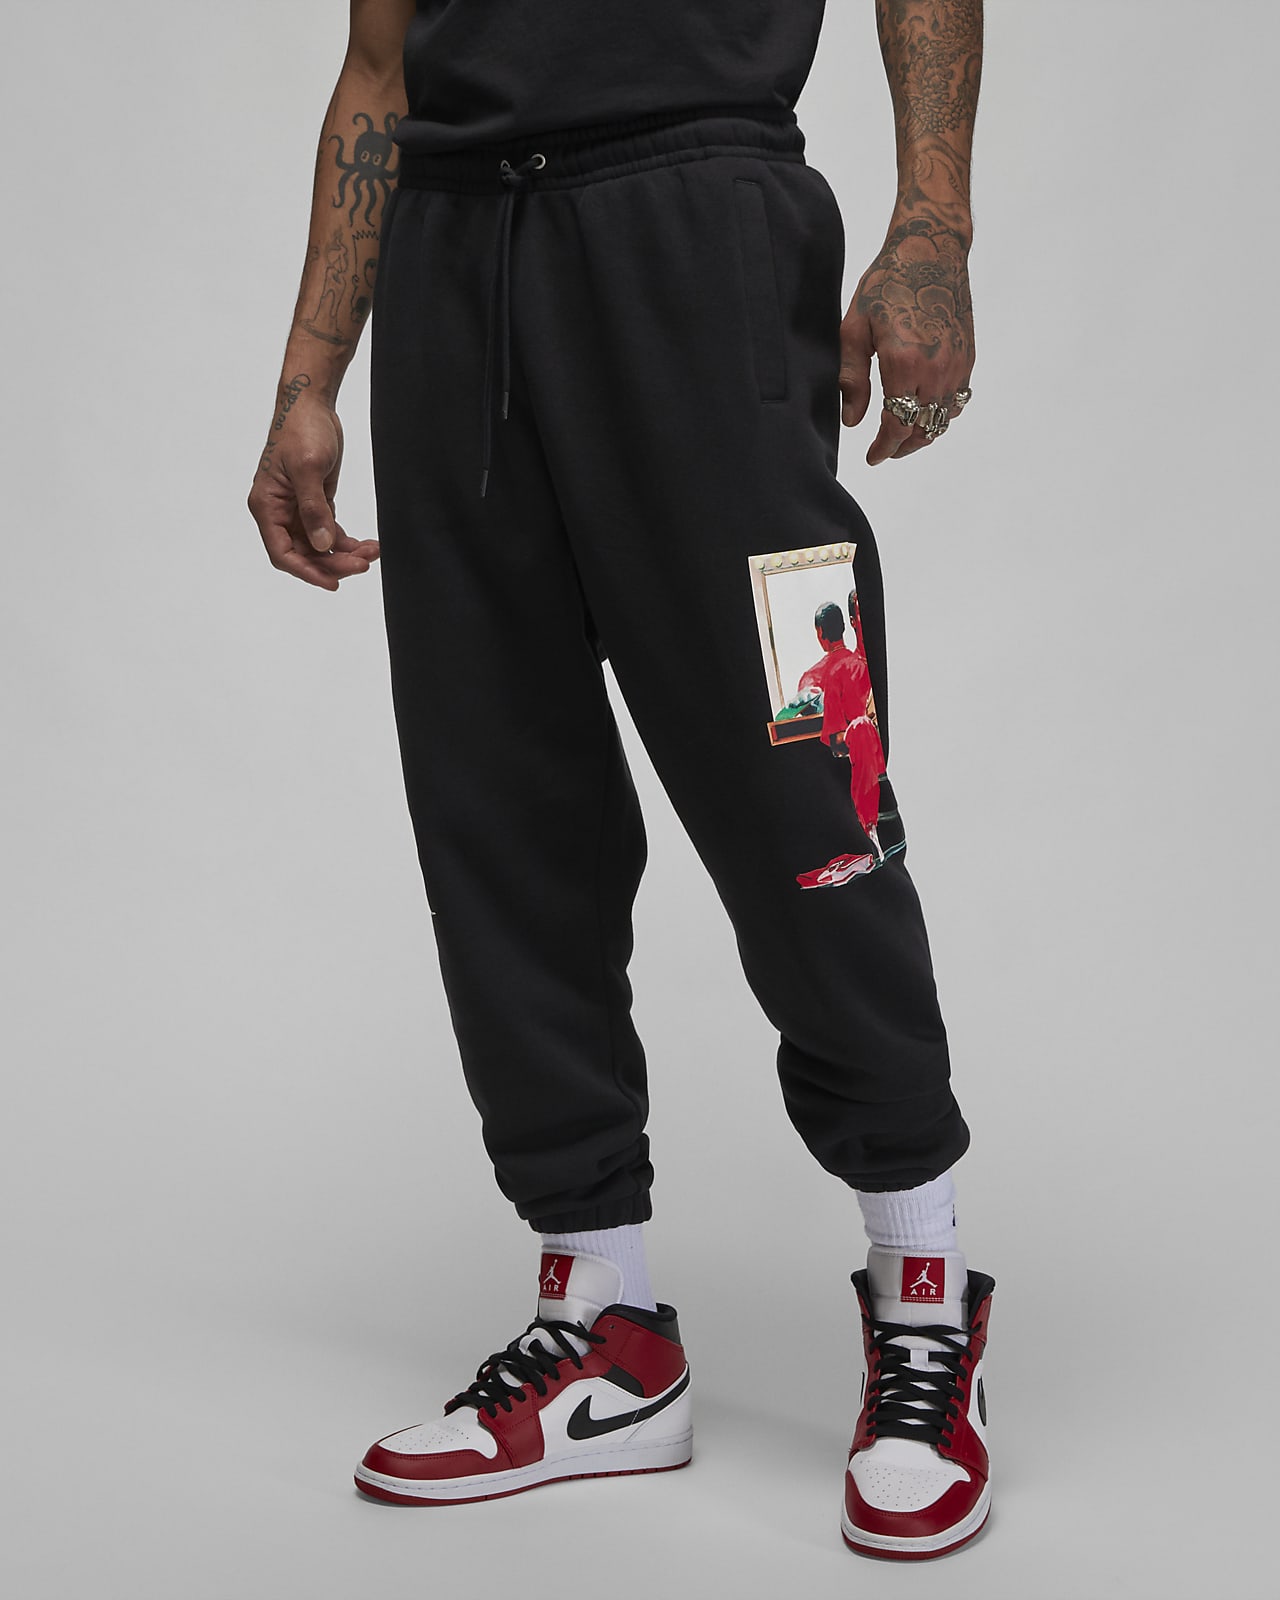 Pants de tejido Fleece para hombre Jordan Series de Jacob Rochester. Nike.com